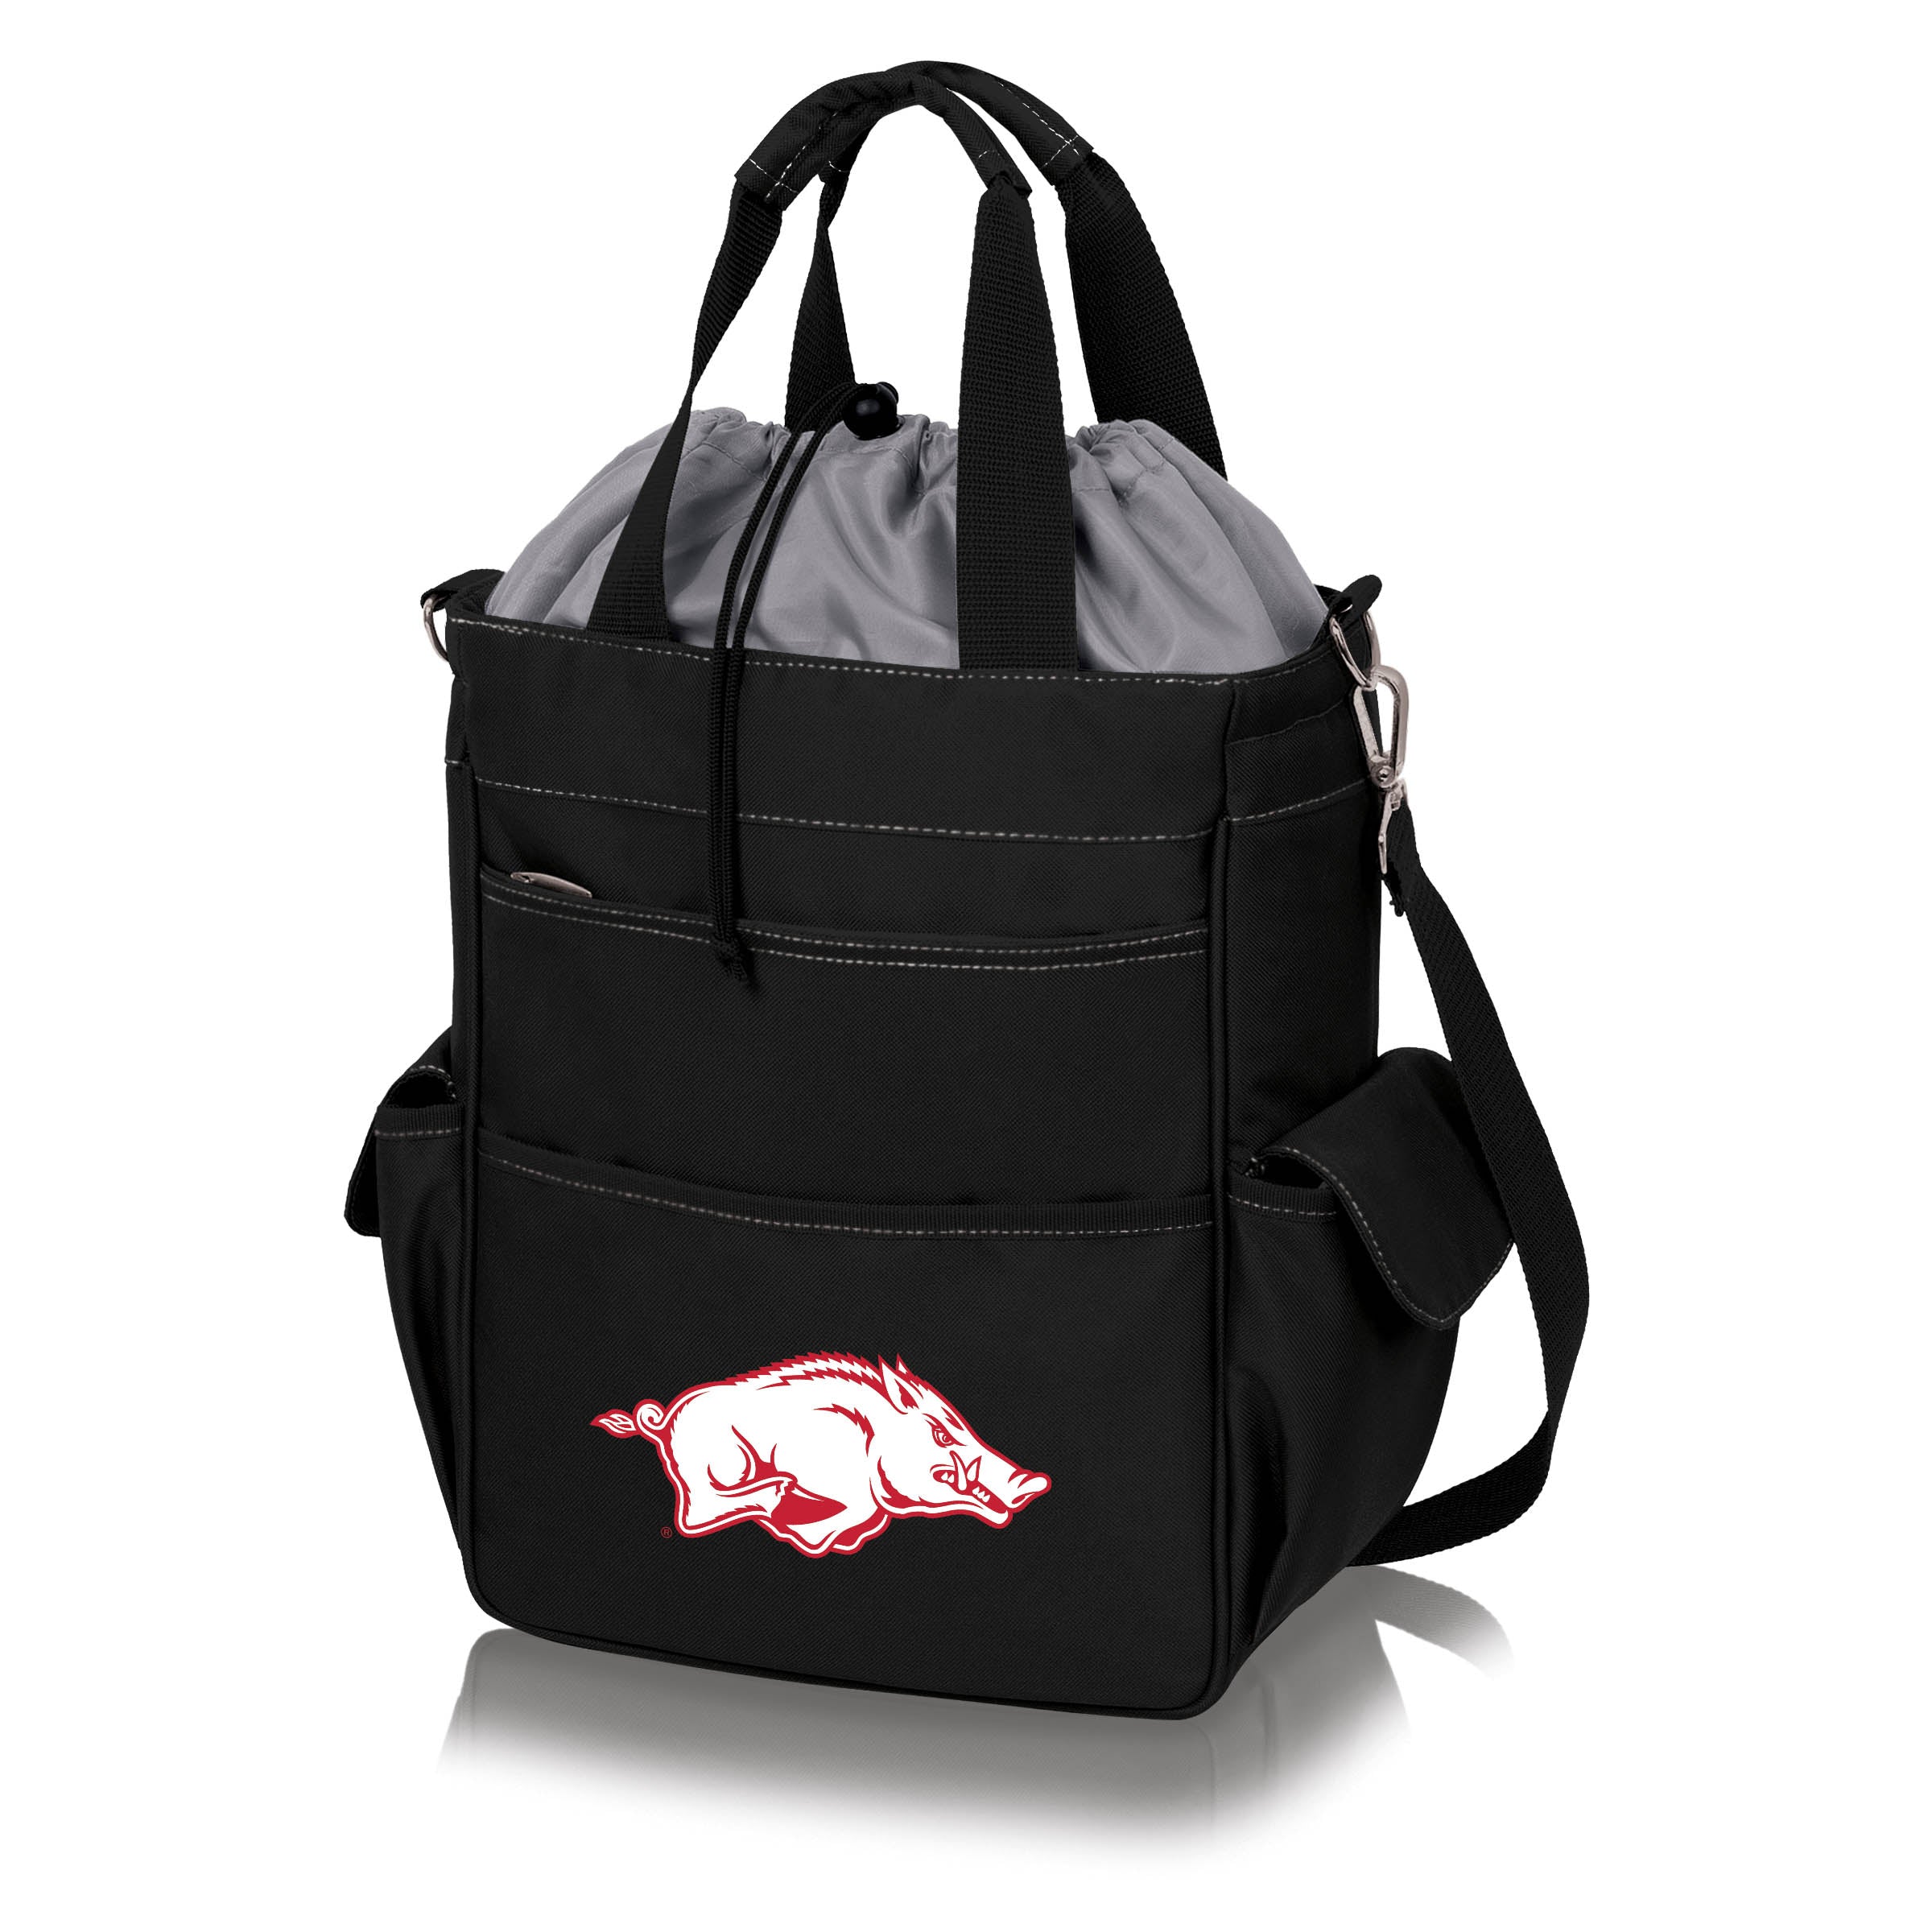 Arkansas Razorbacks - Activo Cooler Tote Bag